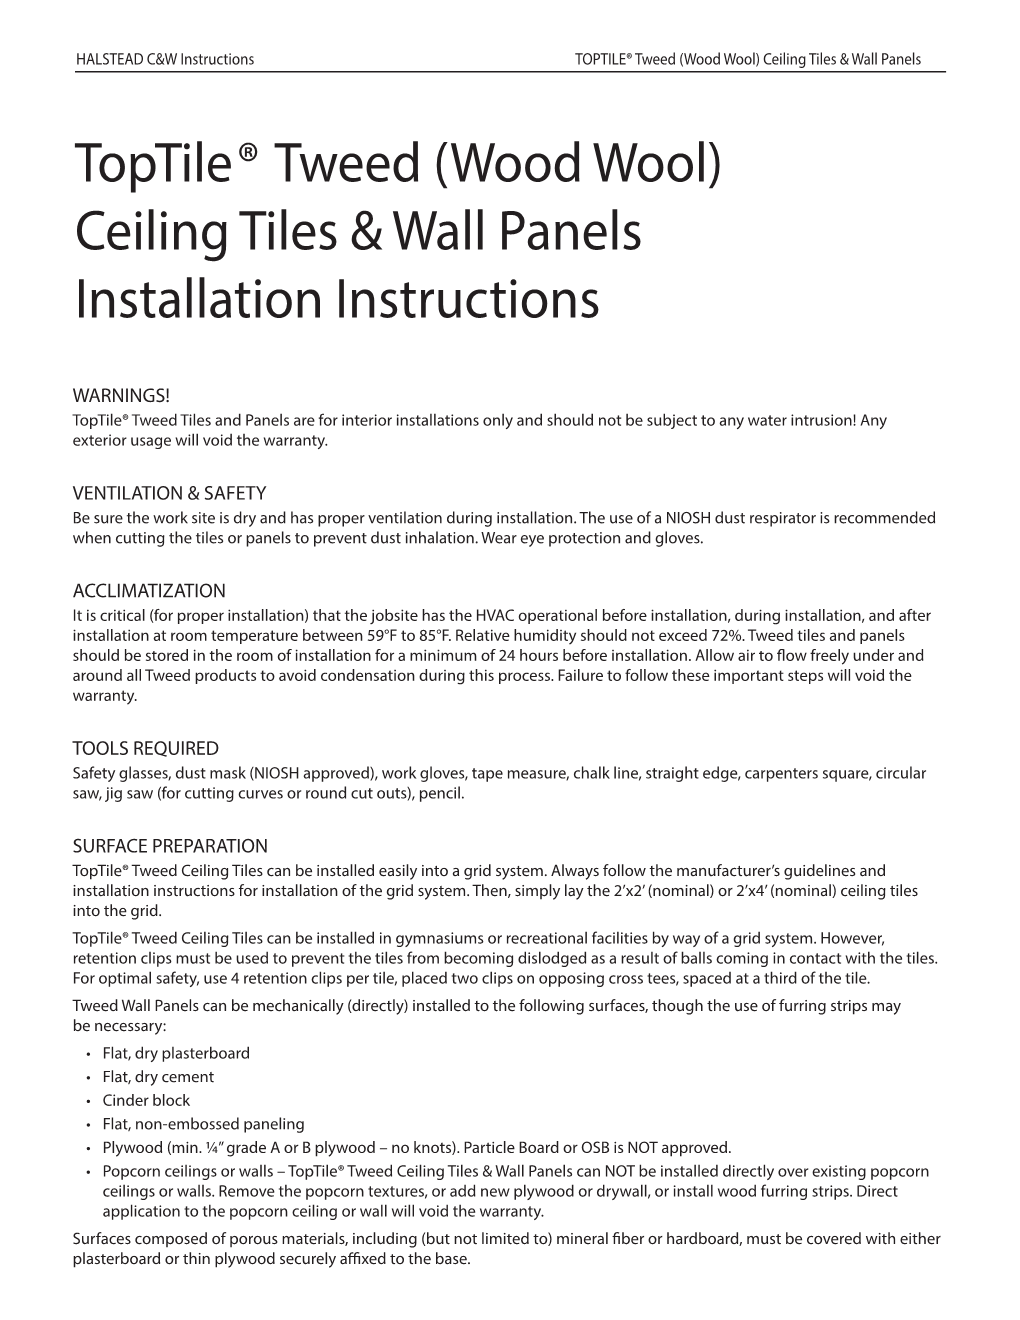 Toptile® Tweed (Wood Wool) Ceiling Tiles & Wall Panels Installation